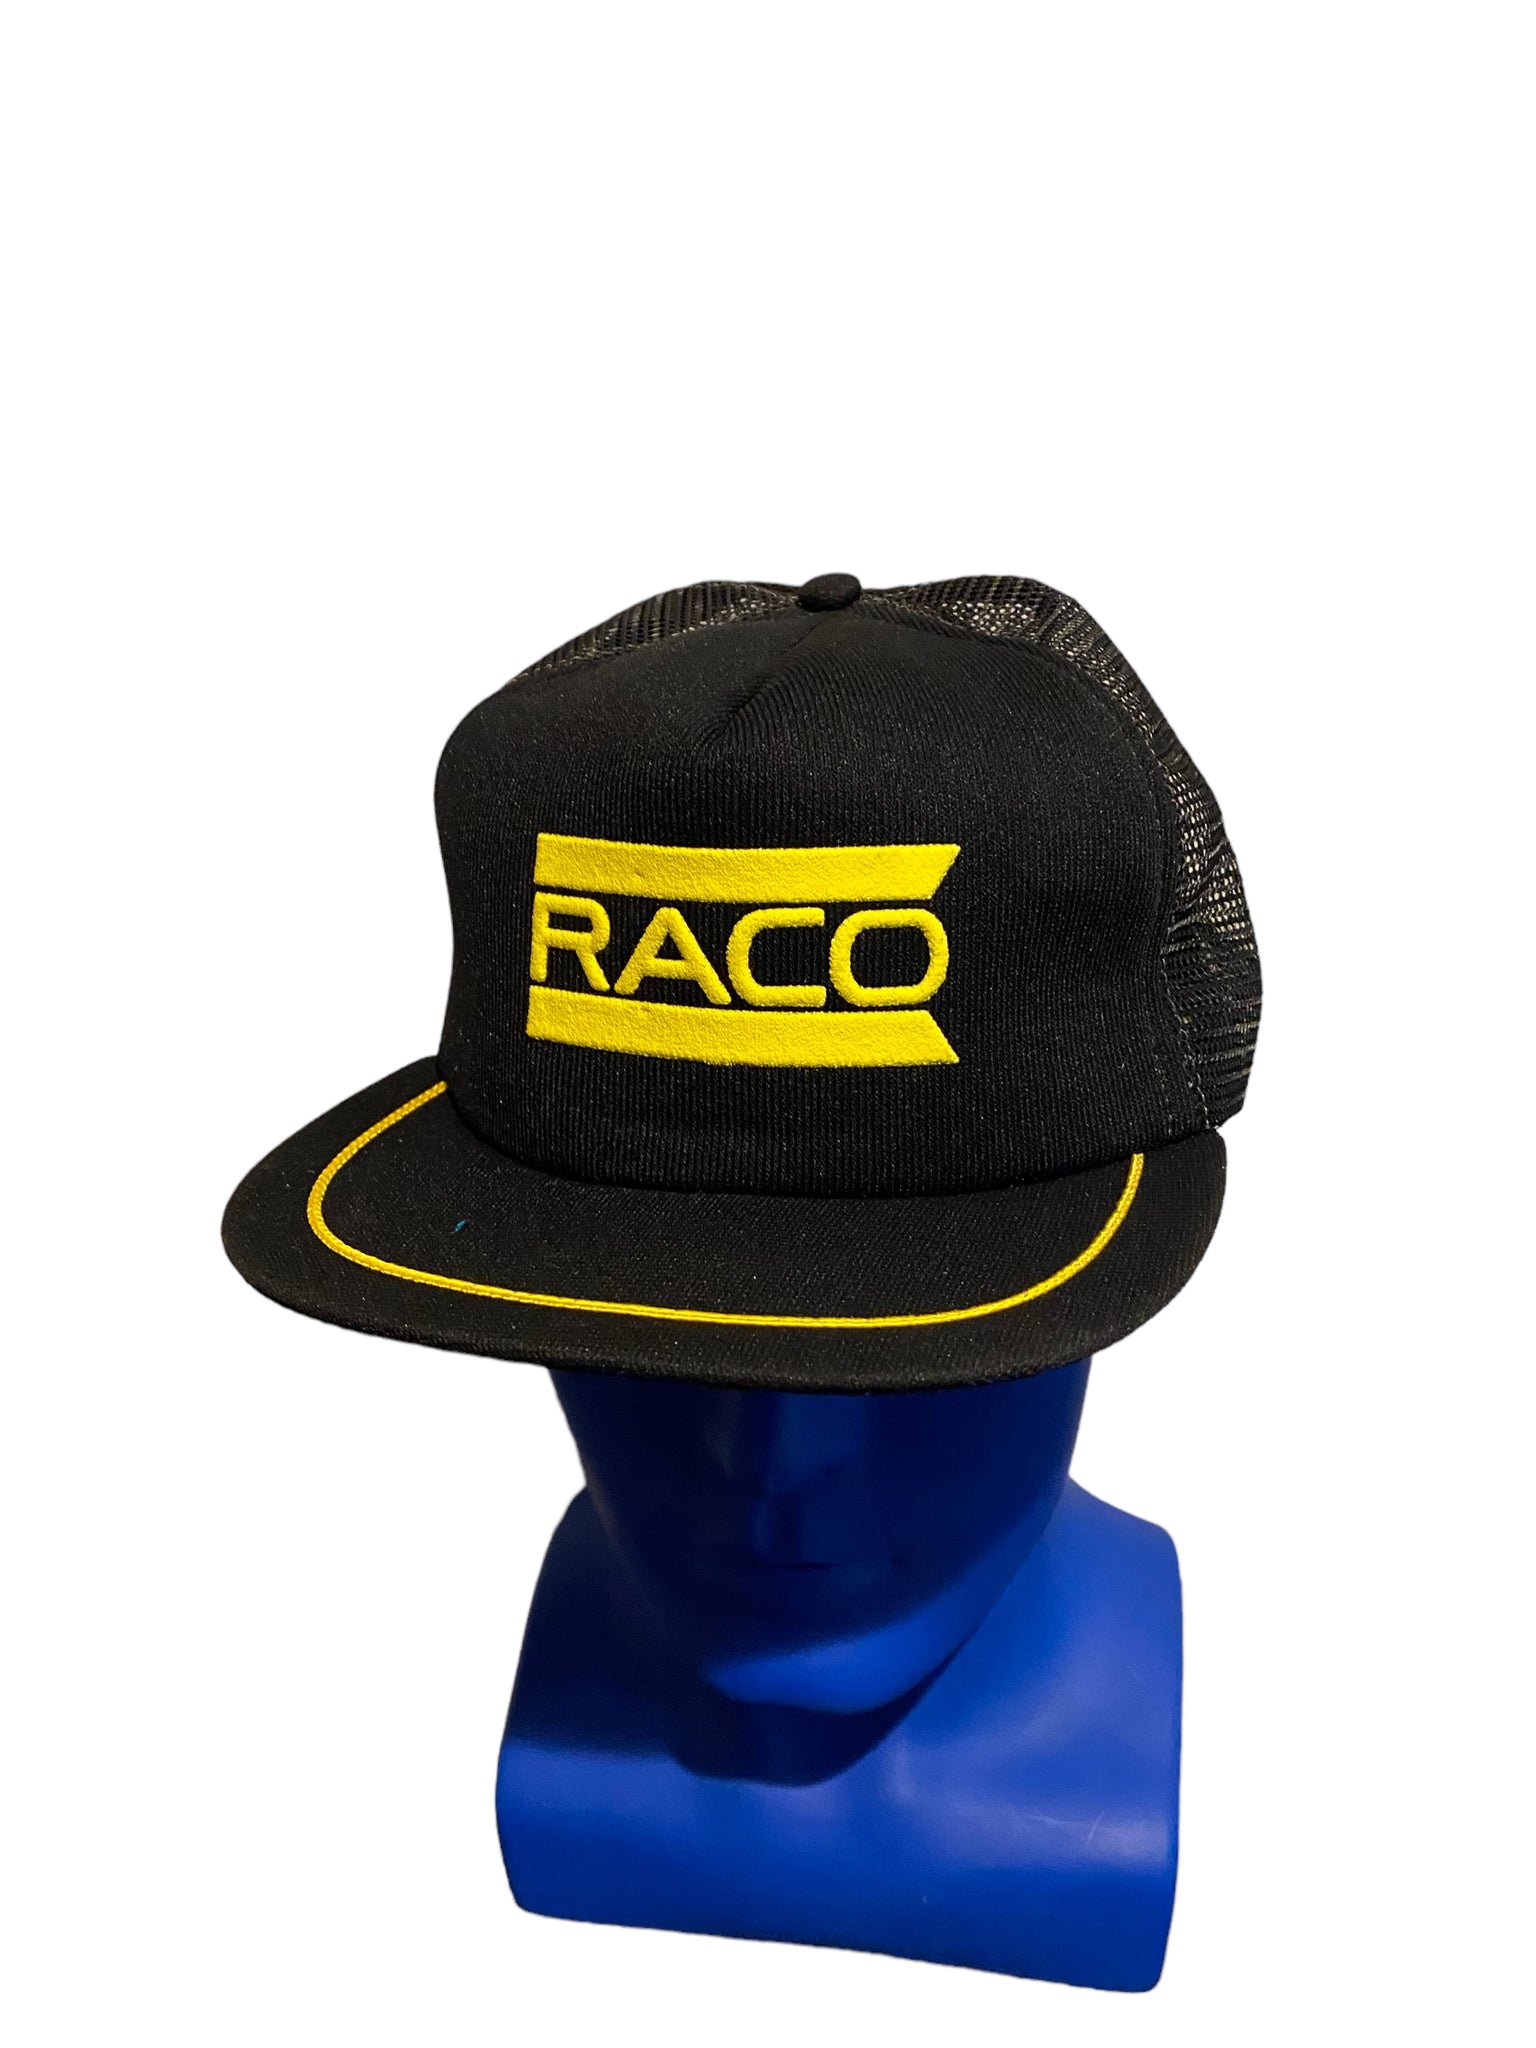 RACO Hat Vintage Snapback Foam Front Cap 3D Puff Print Trucker USA Made